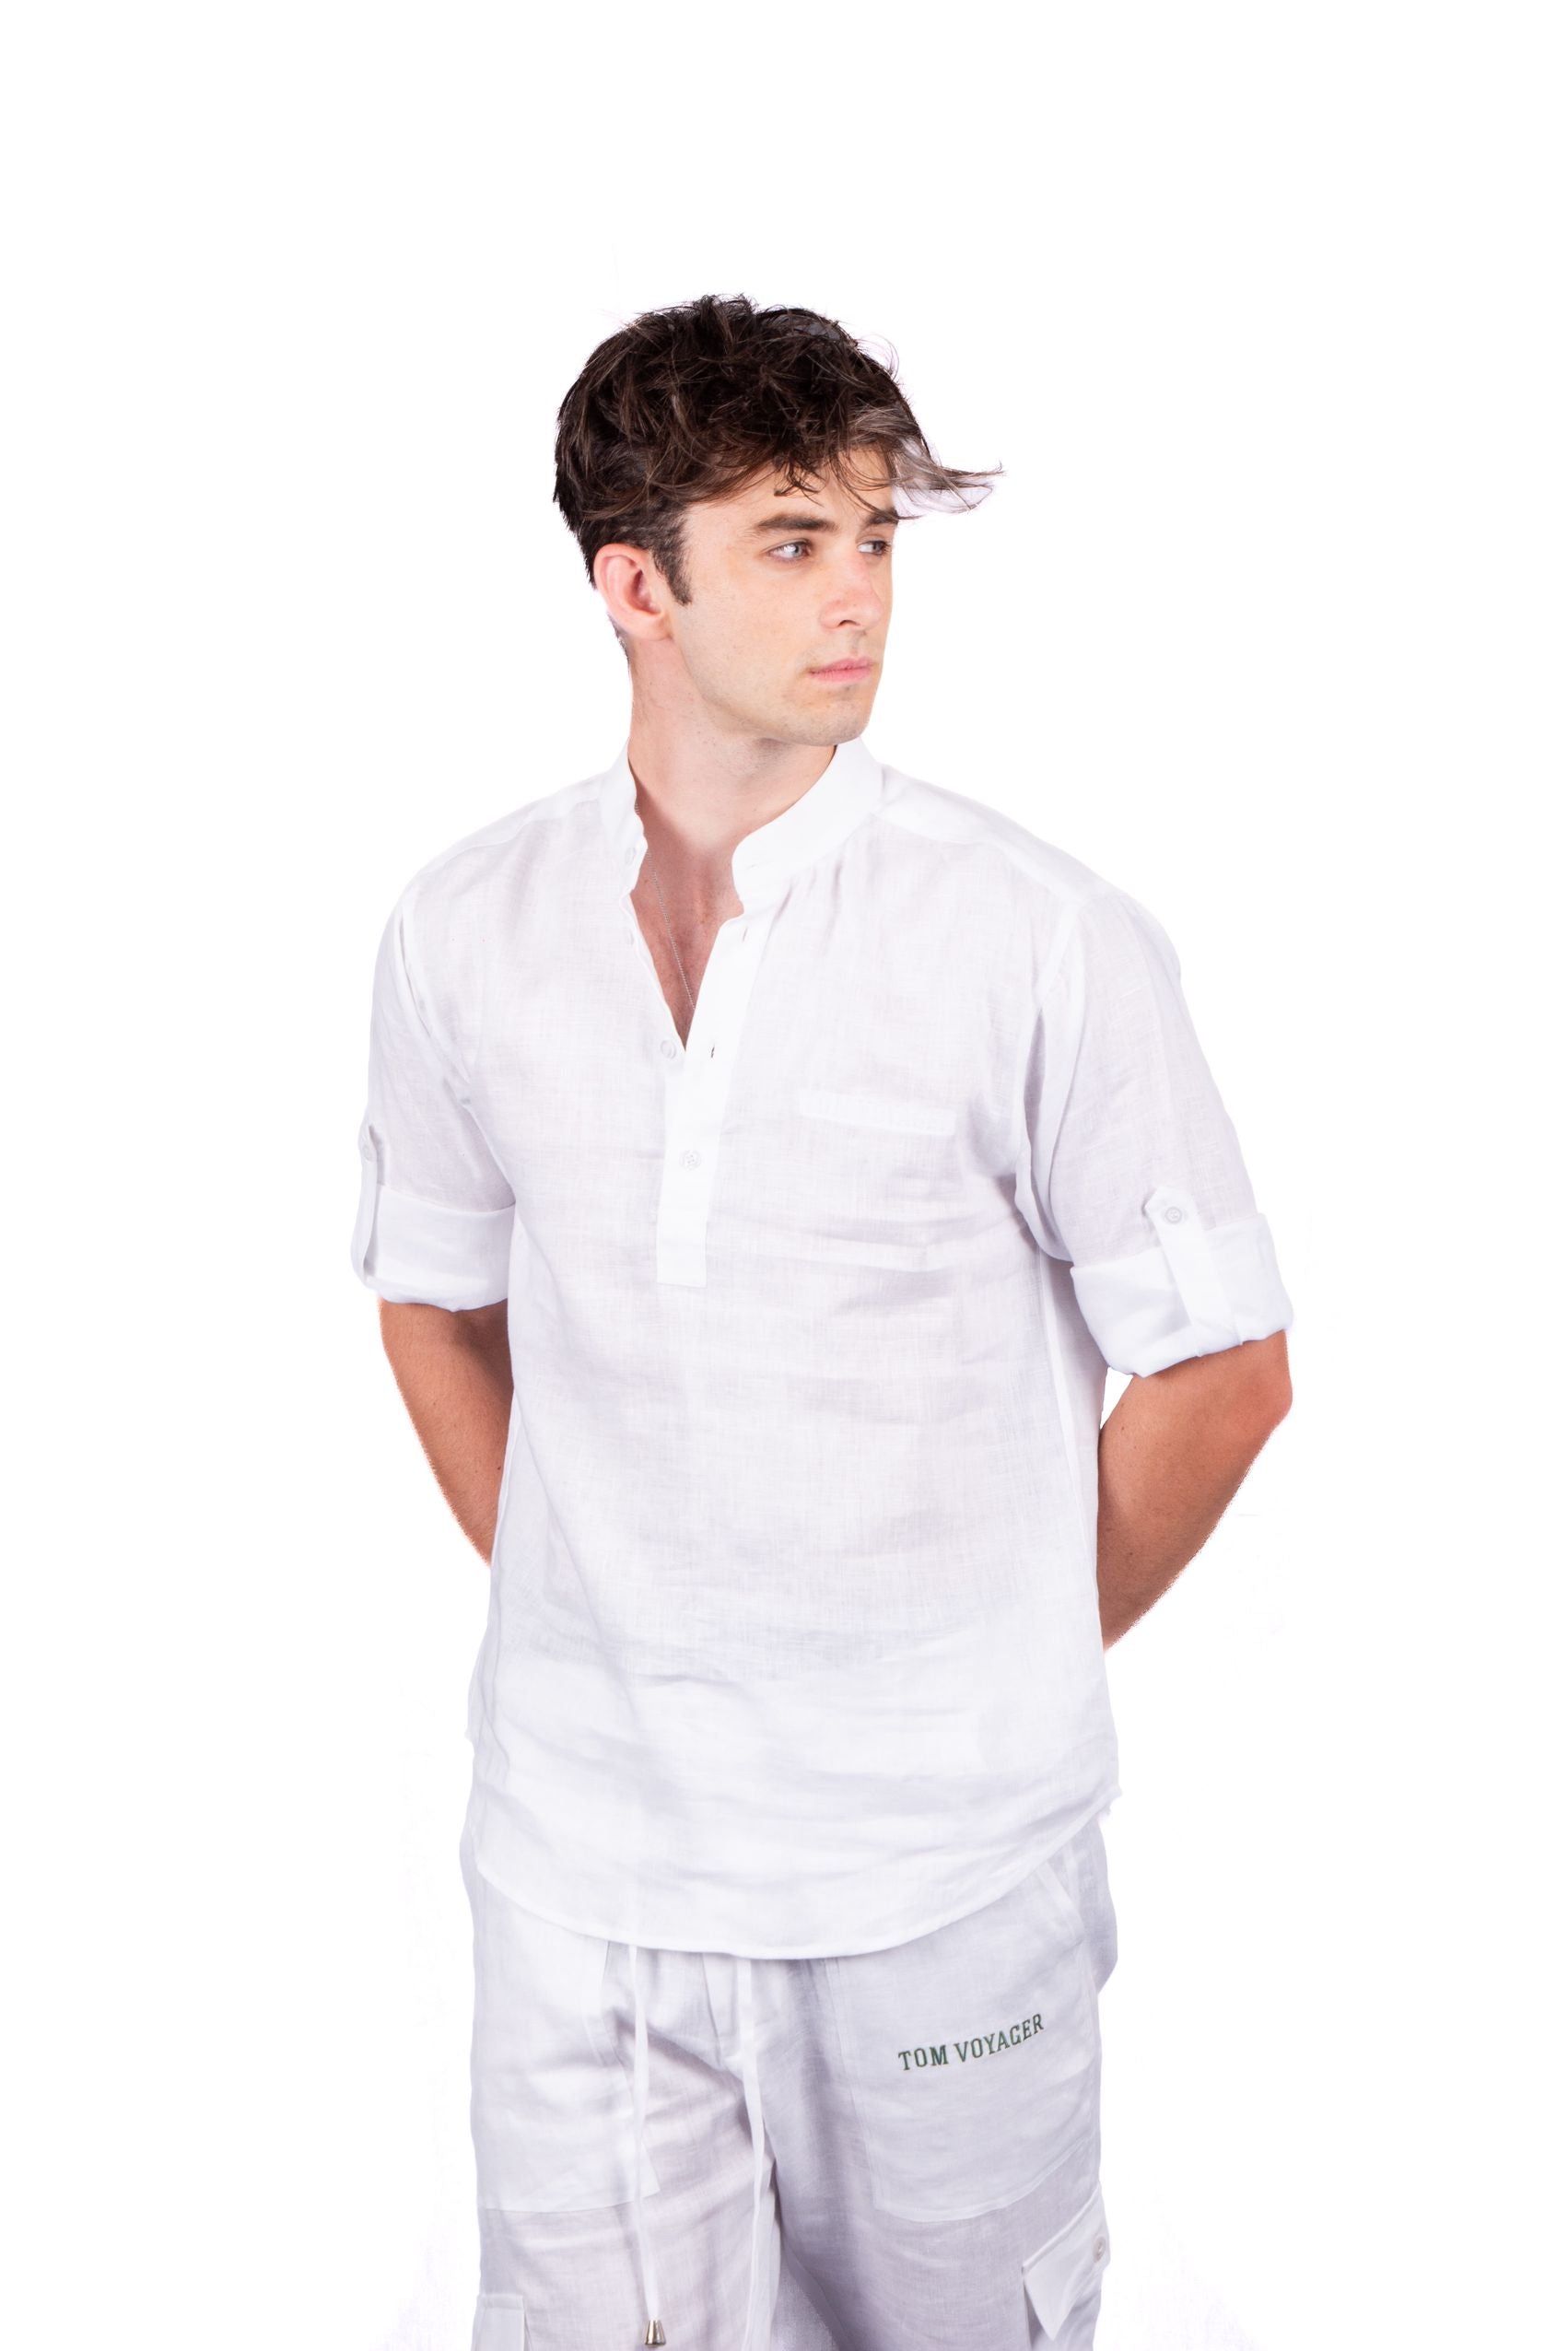 Austin Linen Shirt - Short Sleeve Shirt-mens shirt - white - Tom Voyager